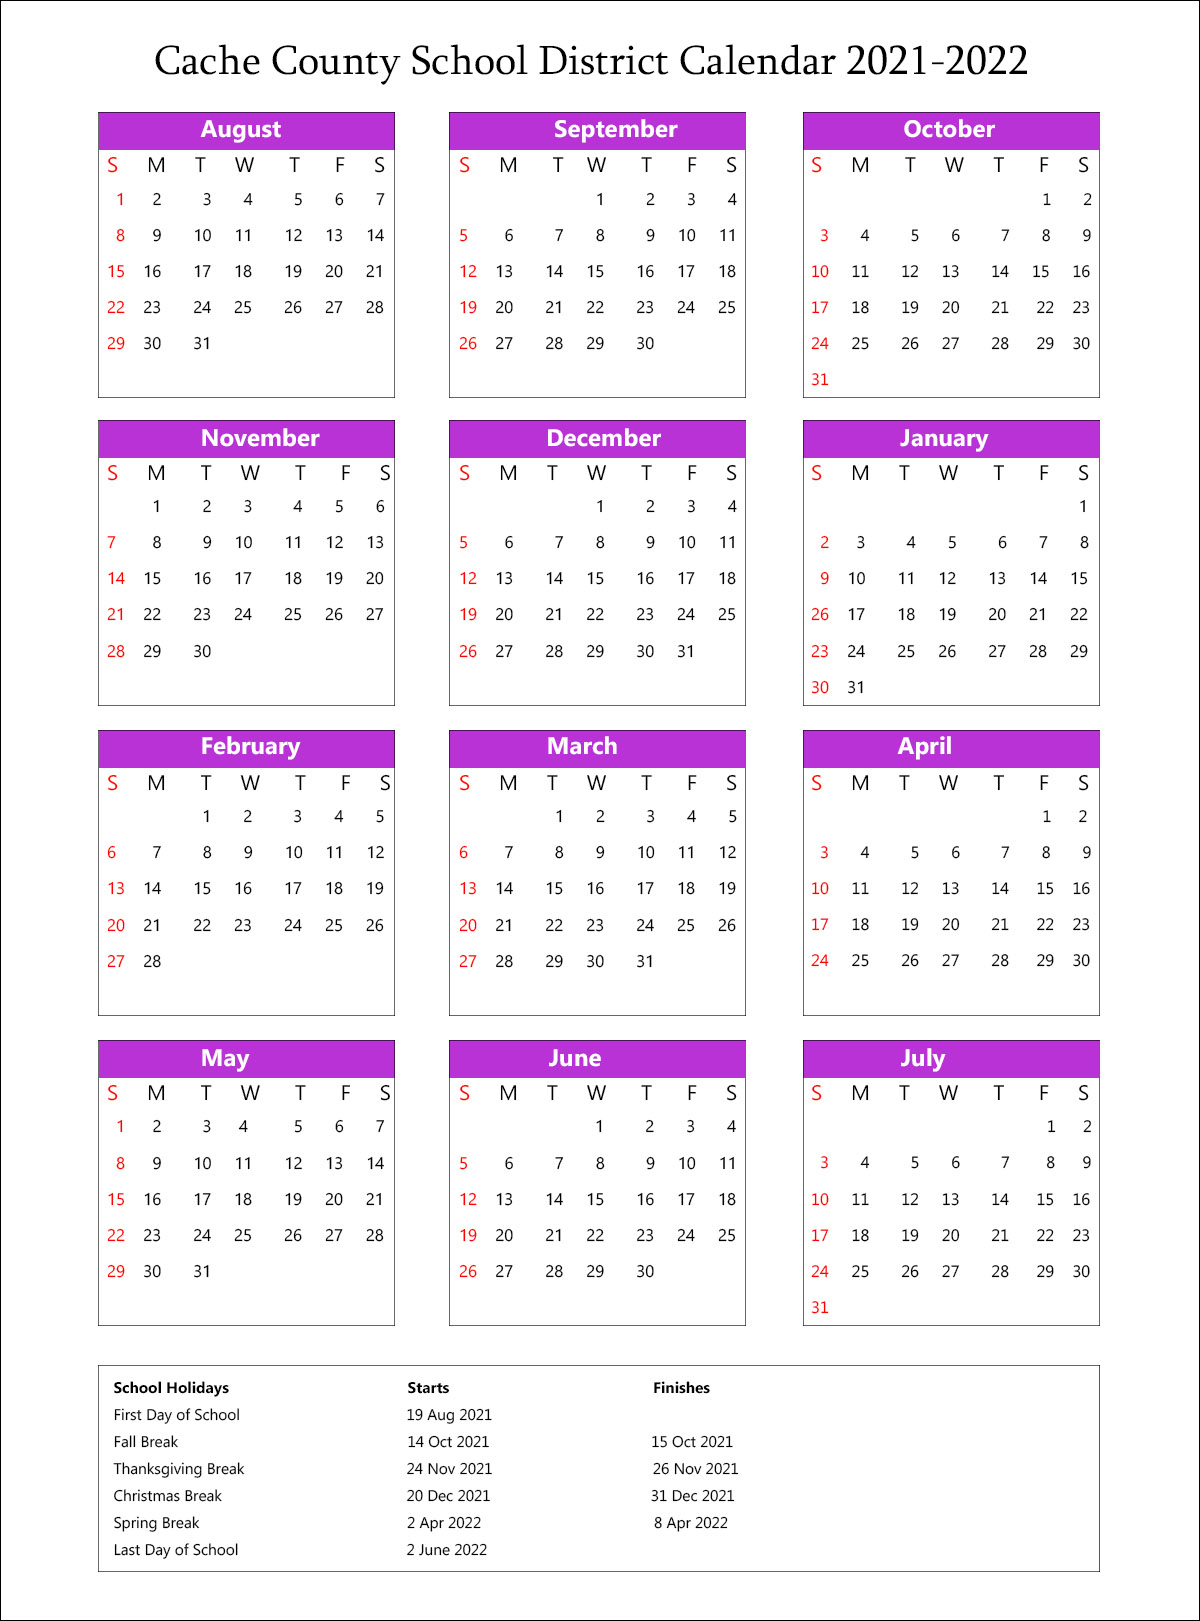 Cache County School District Calendar Holidays 2021-2022